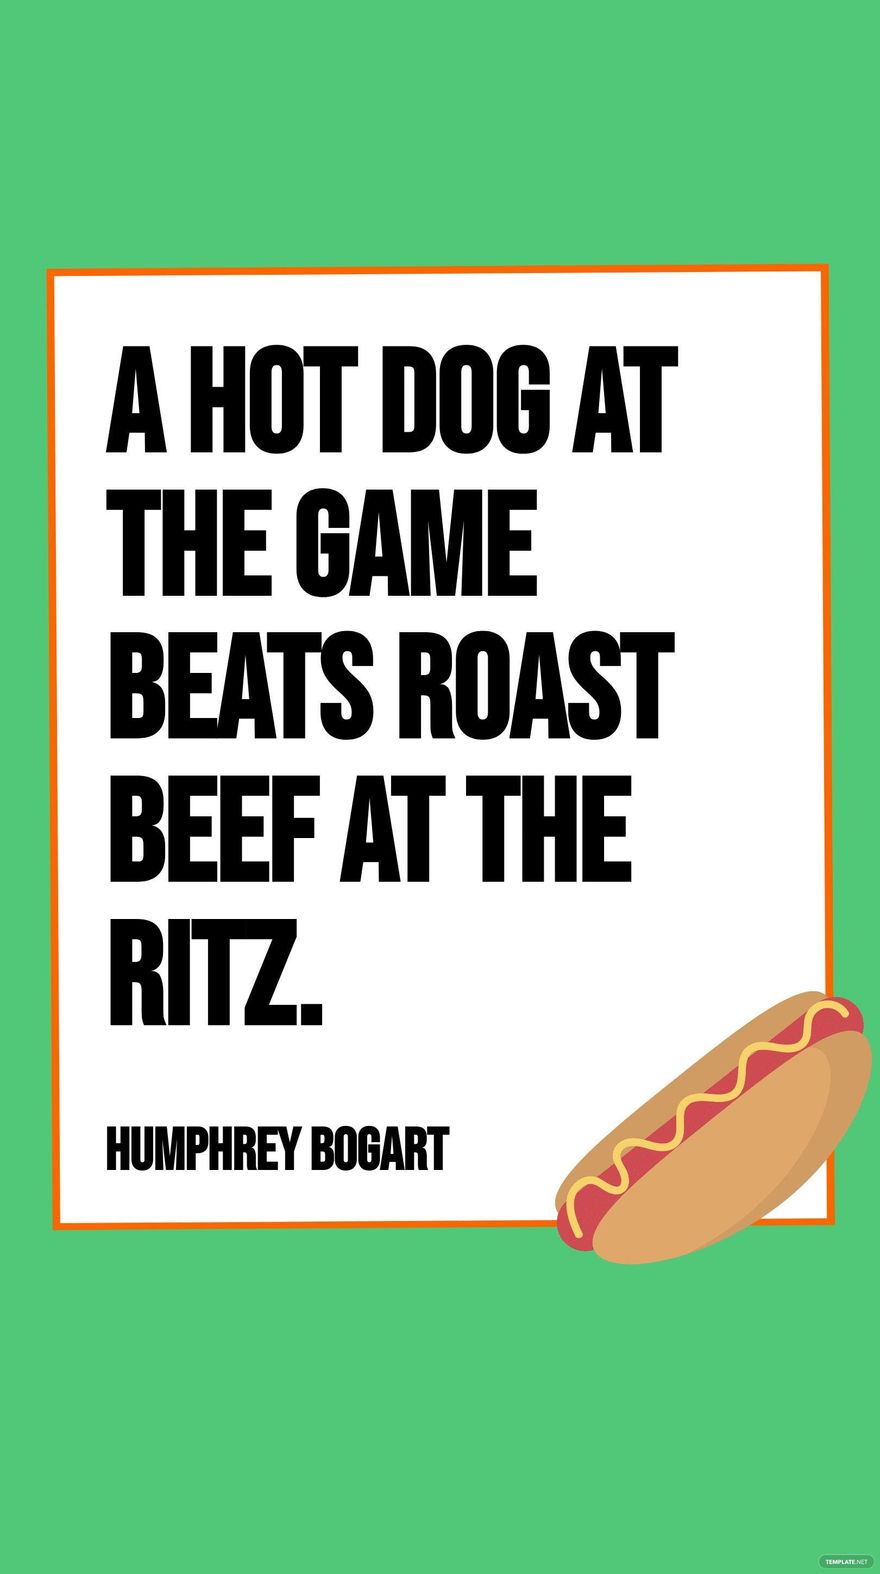 Humphrey Bogart - A hot dog at the game beats roast beef at the Ritz.